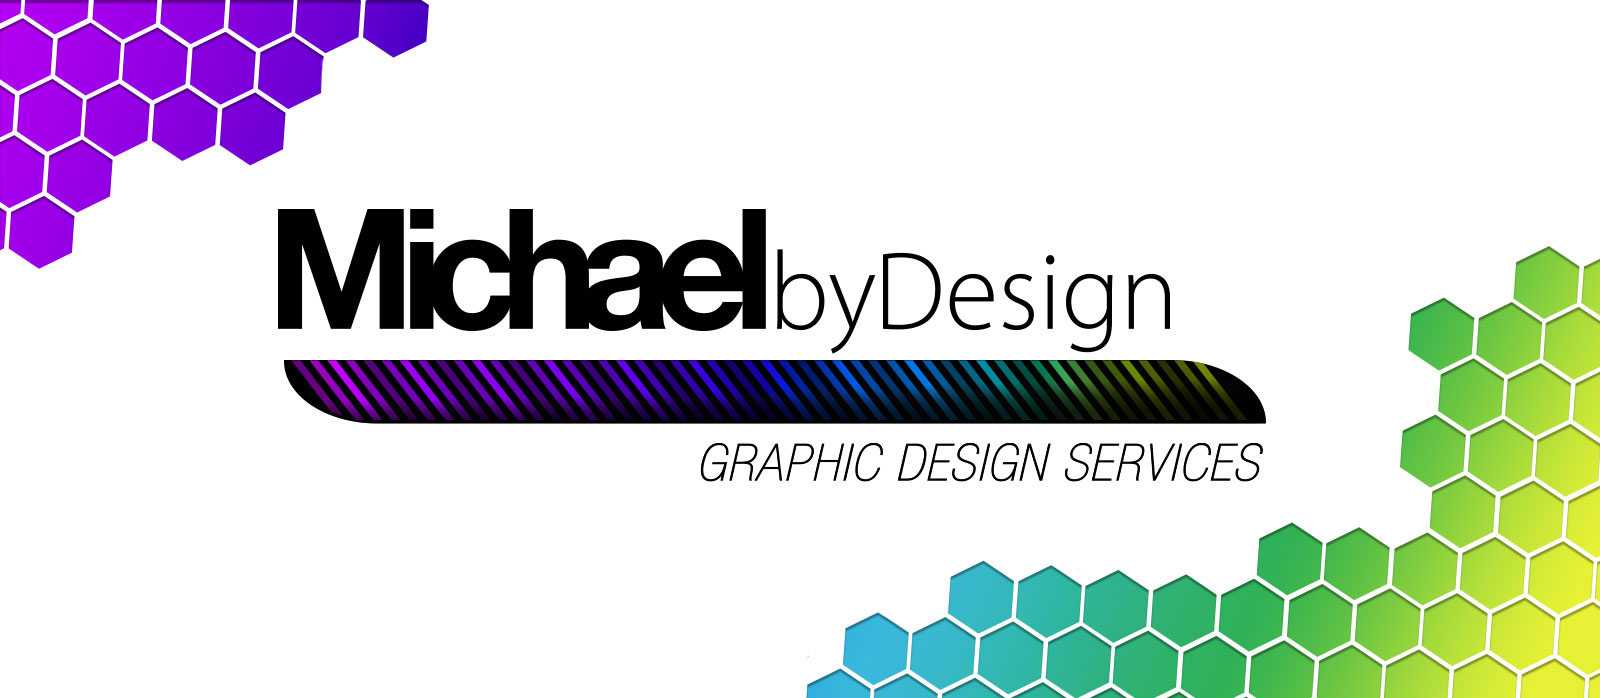 Michael by Design, Graphic Design Services